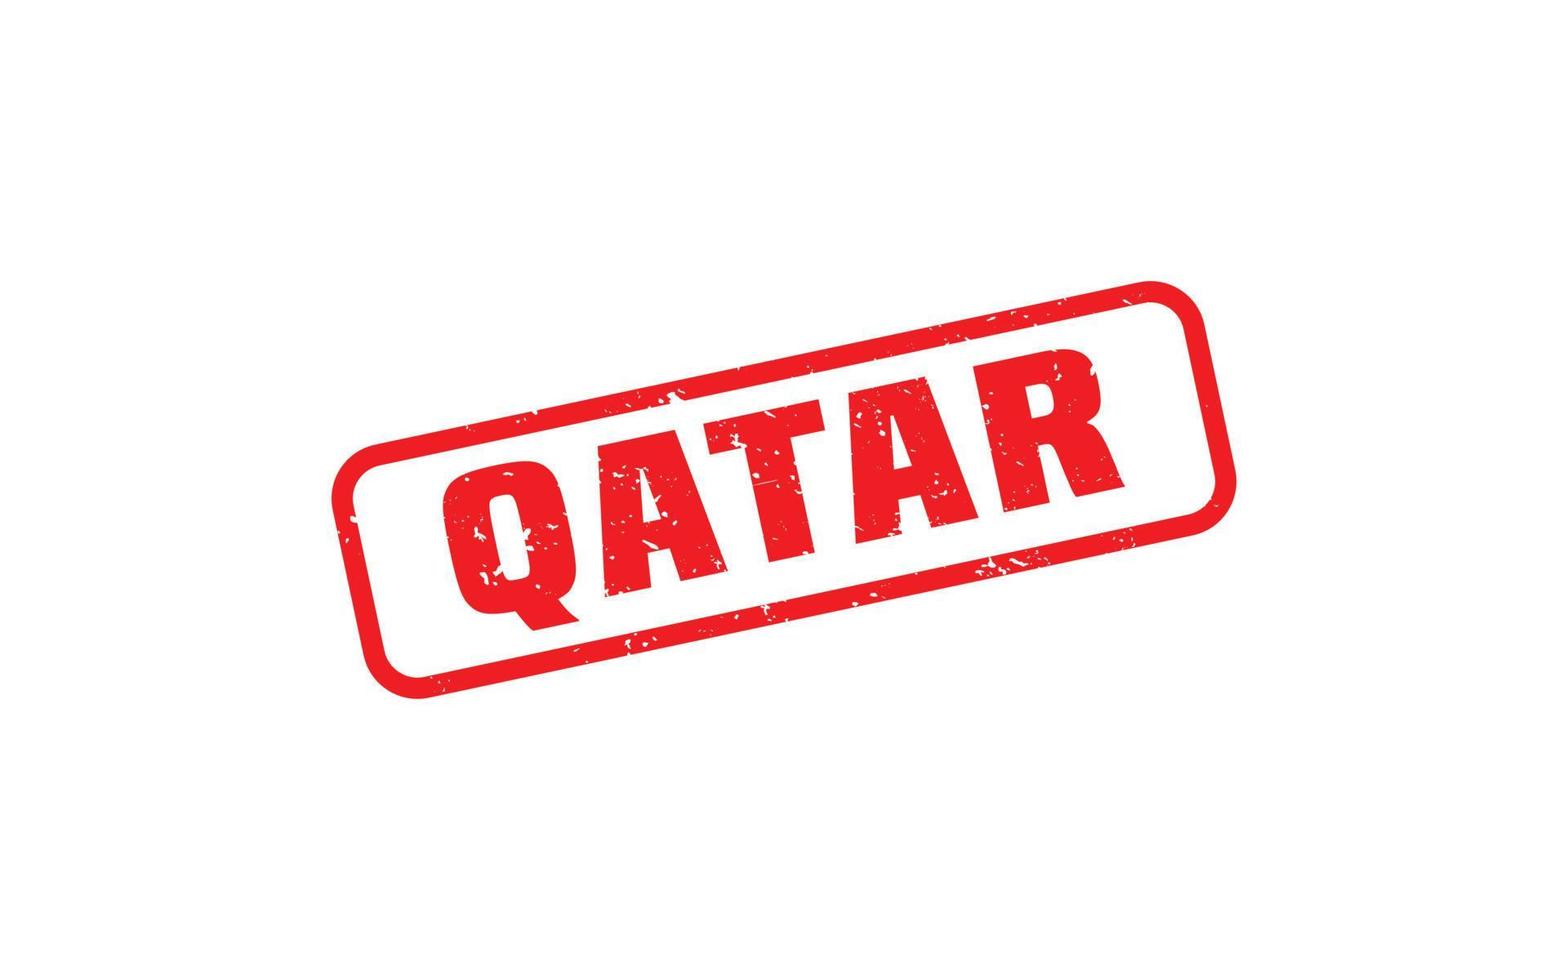 goma de sello qatar con estilo grunge sobre fondo blanco vector